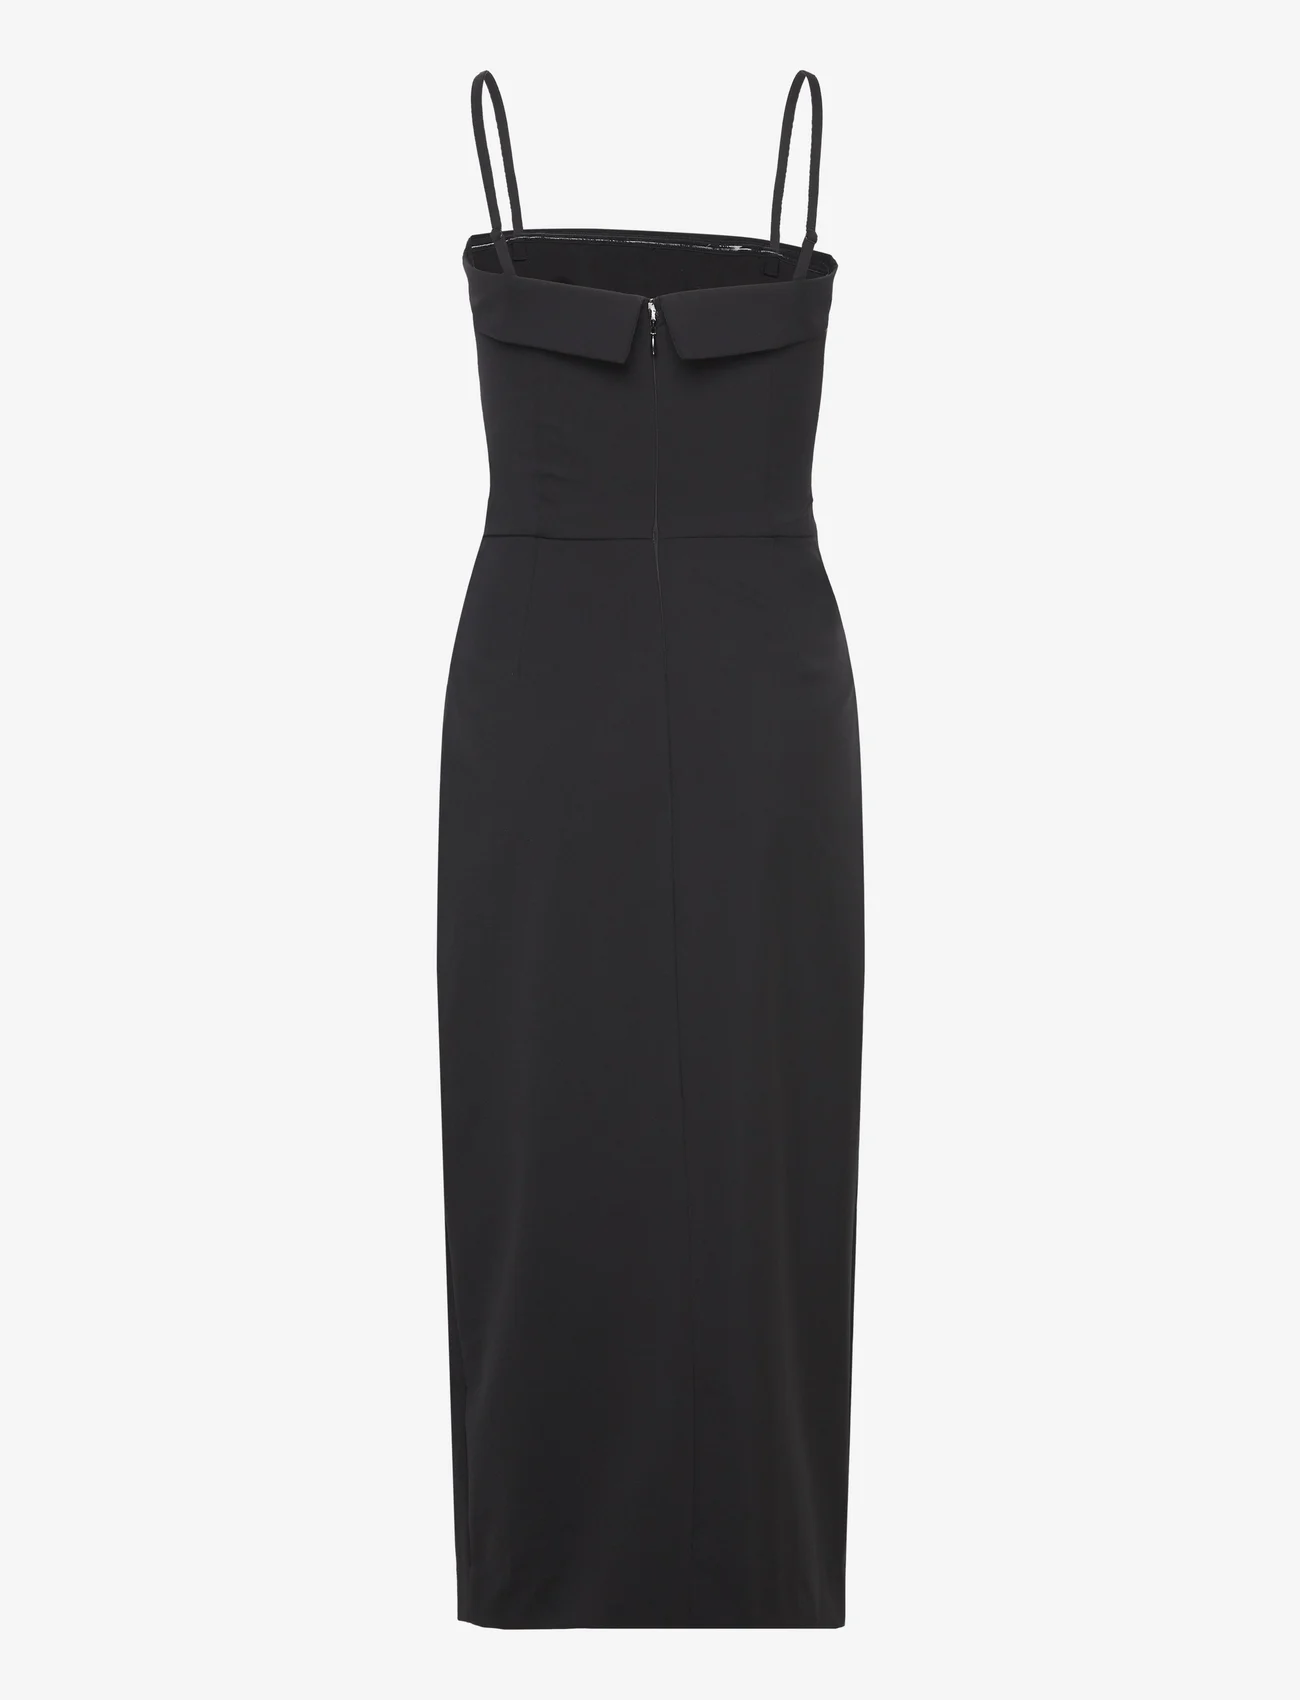 HOLZWEILER - Shelly Dress - ballīšu apģērbs par outlet cenām - black - 1